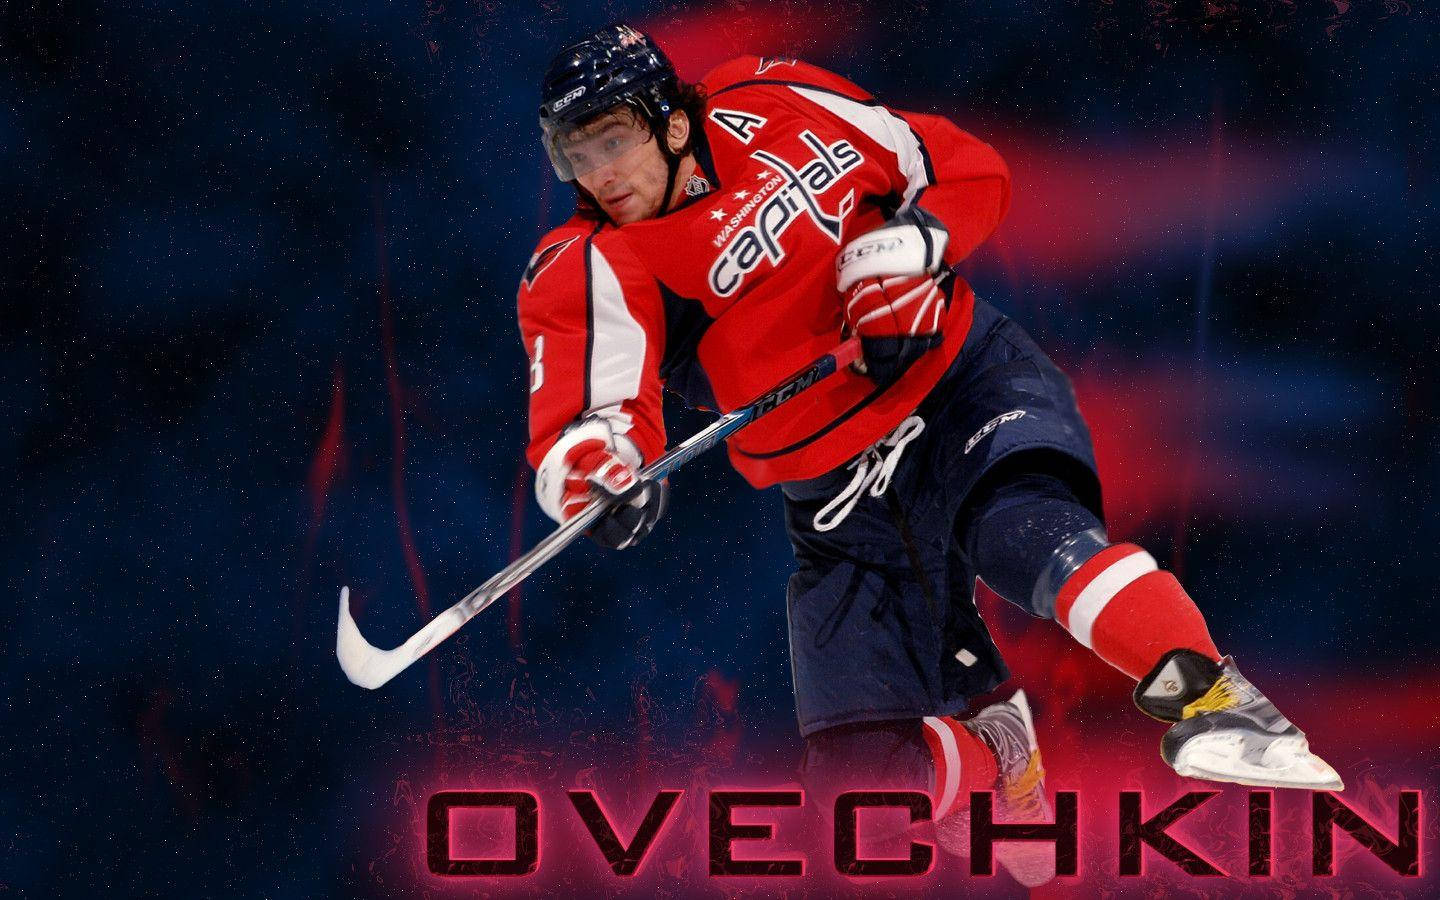 Alex Ovechkin Fanpage - I love this Alex Ovechkin artwork! 😍 IG wilkovv  first hockey designtried something inspired by @vandal_designs Alex  Ovechkin #8 #alexovechkin #ovechkin #capitals #nhl #hockey  #washingtoncapitals #nhledits #hockeyedits